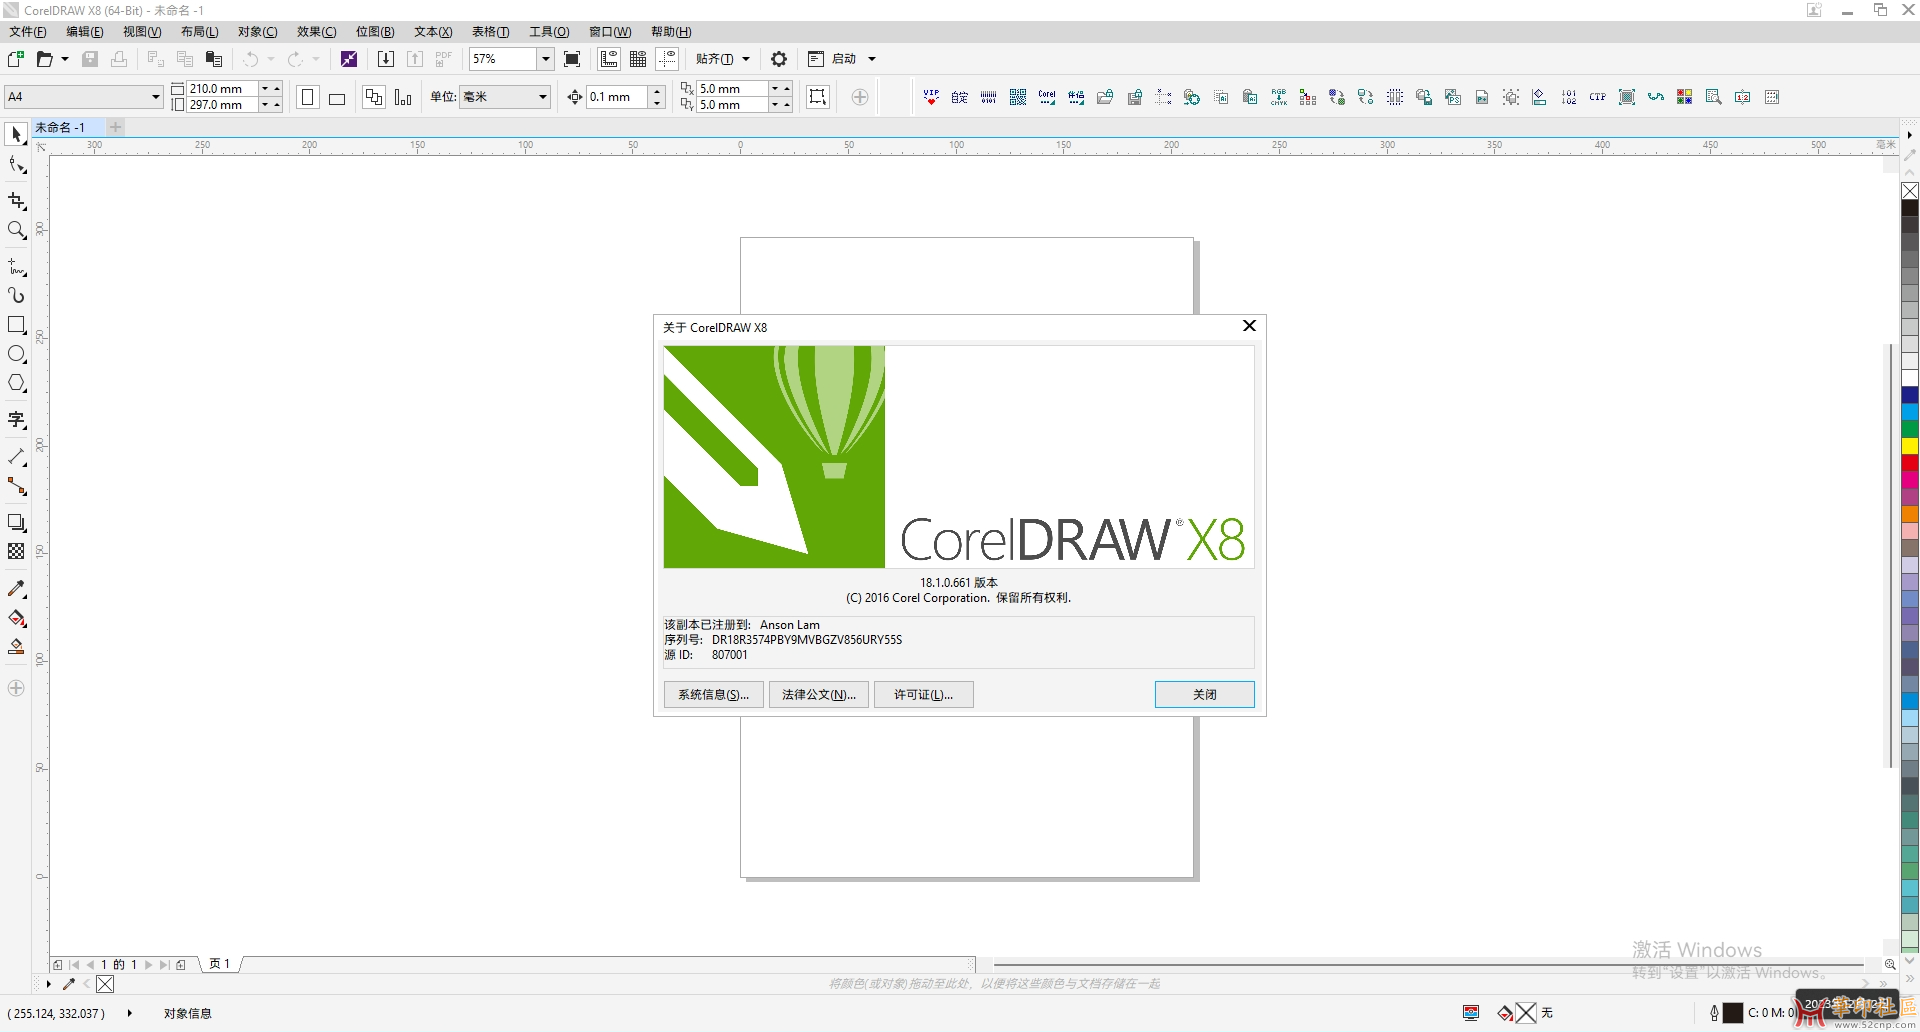 CorelDRAW X8 纯绿色插件版 解压后直接运行,无需安装!!!{tag}(3)